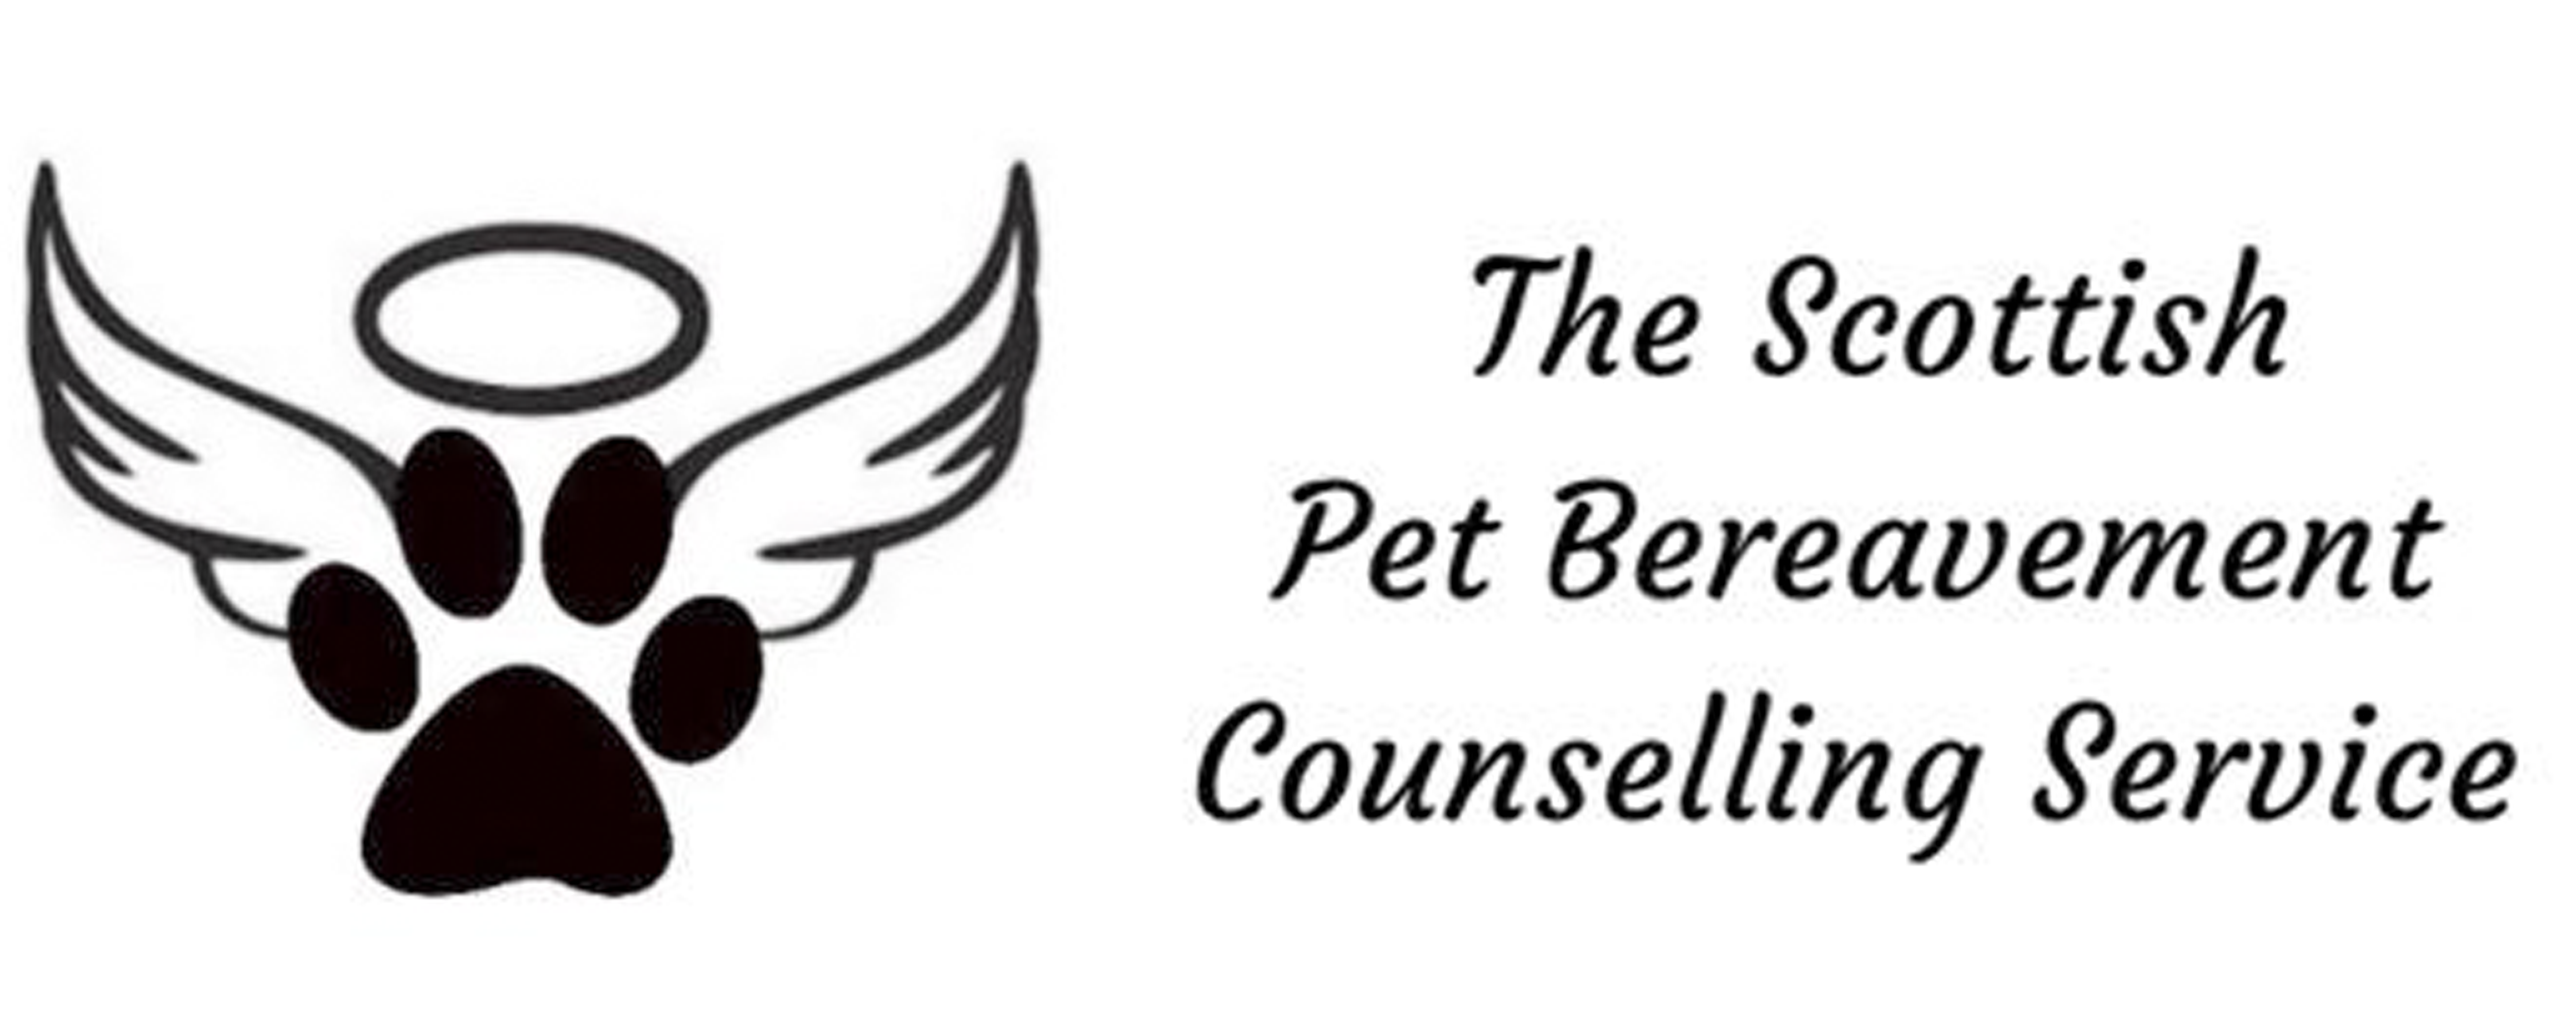 The Scottish Pet Bereavement Counselling Service